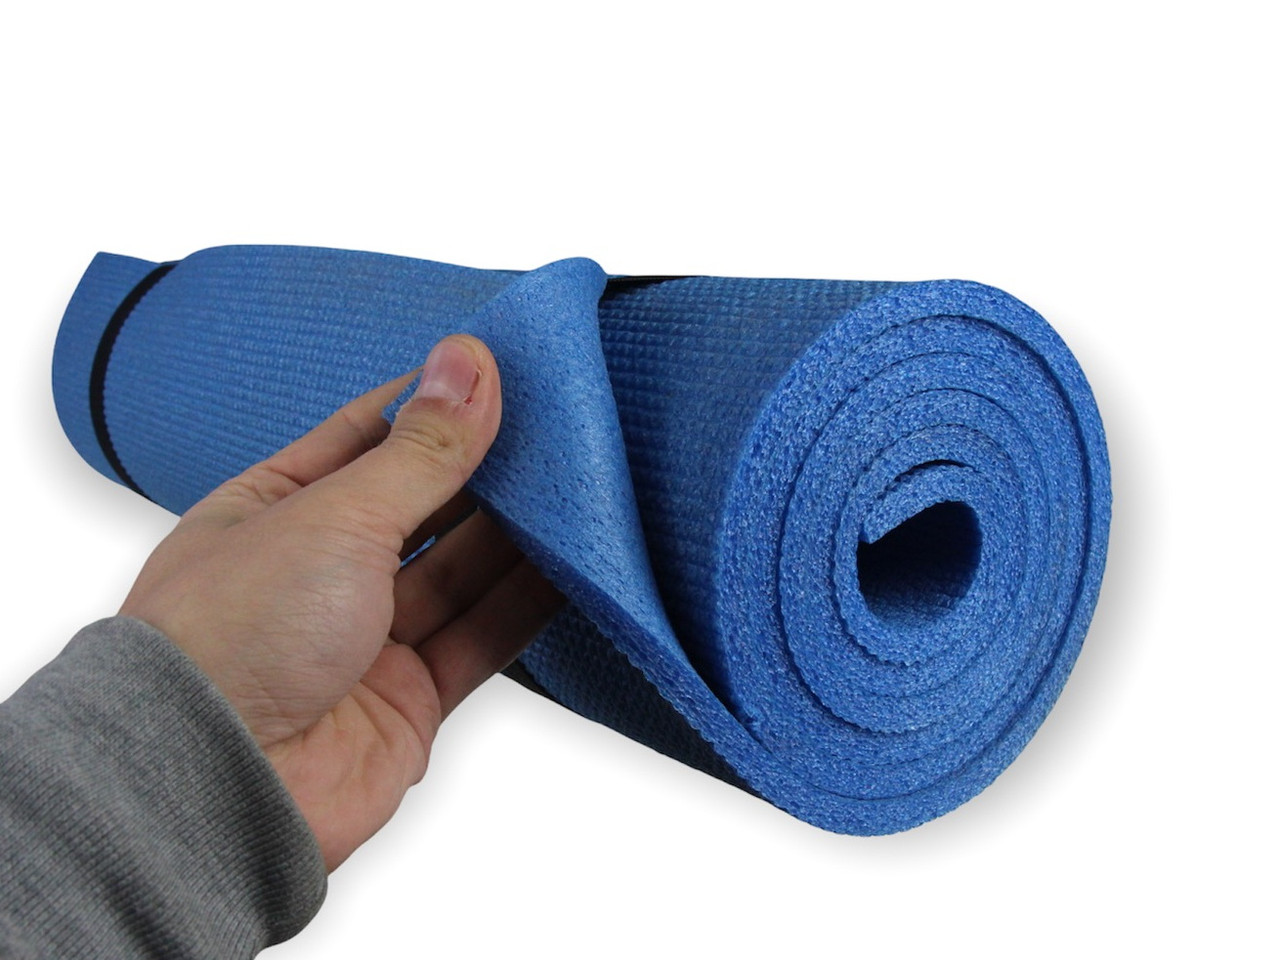 Килимок для фітнесу та йоги AEROBICA 8, синій, товщина 8мм, ширина 120см детальна фотка